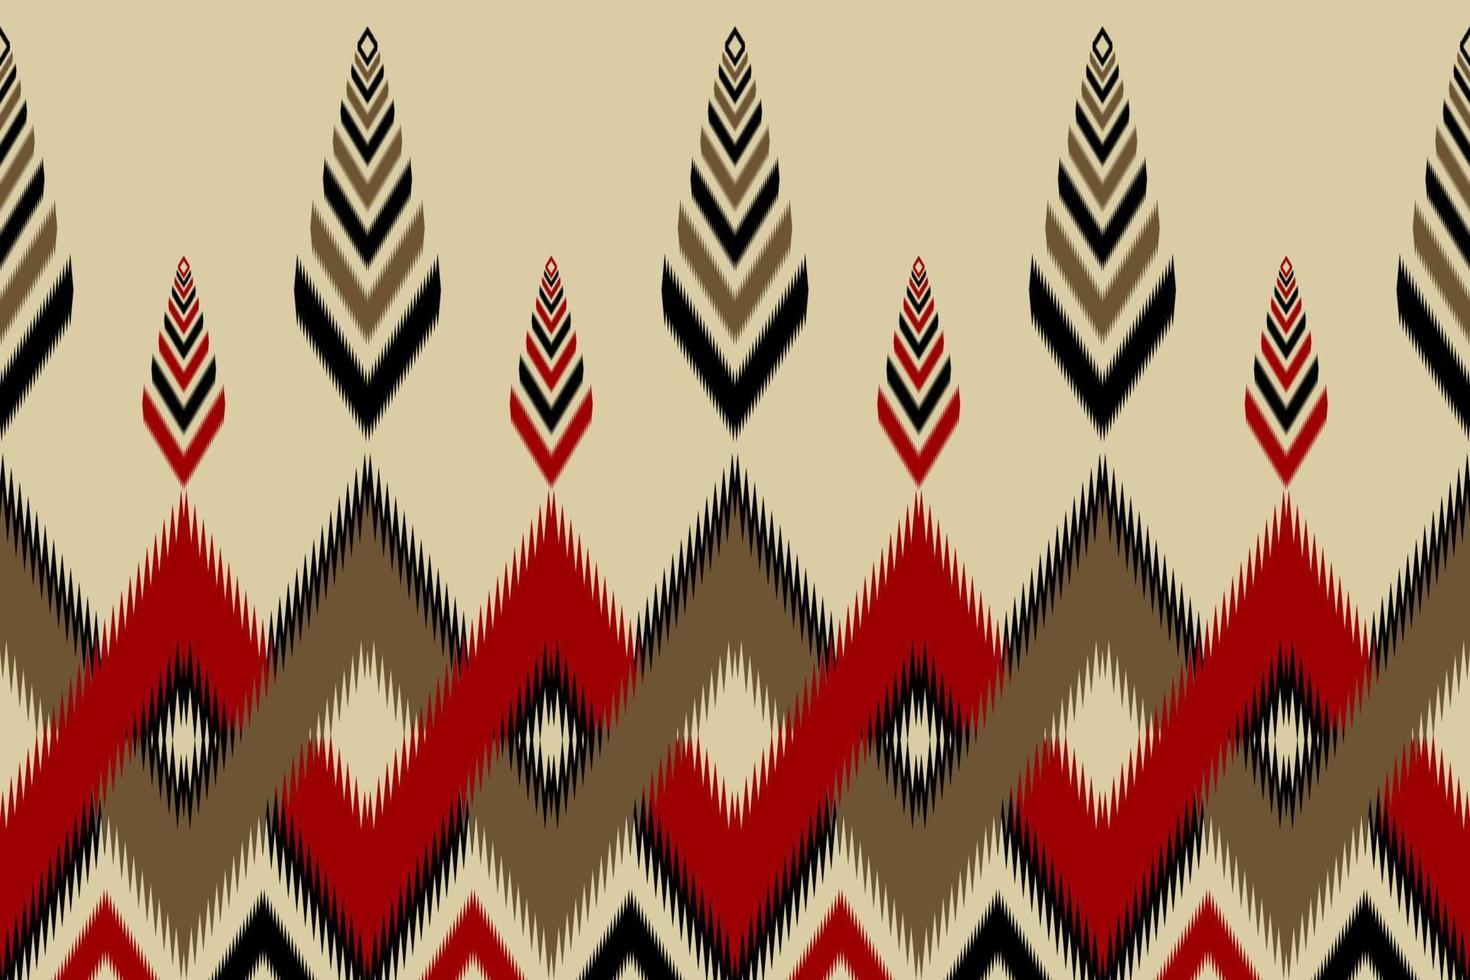 estilo nativo ikat. patrón étnico tradicional. diseño para fondo, ilustración, textura, tela, batik, ropa, envoltura, papel tapiz, alfombra, bordado vector